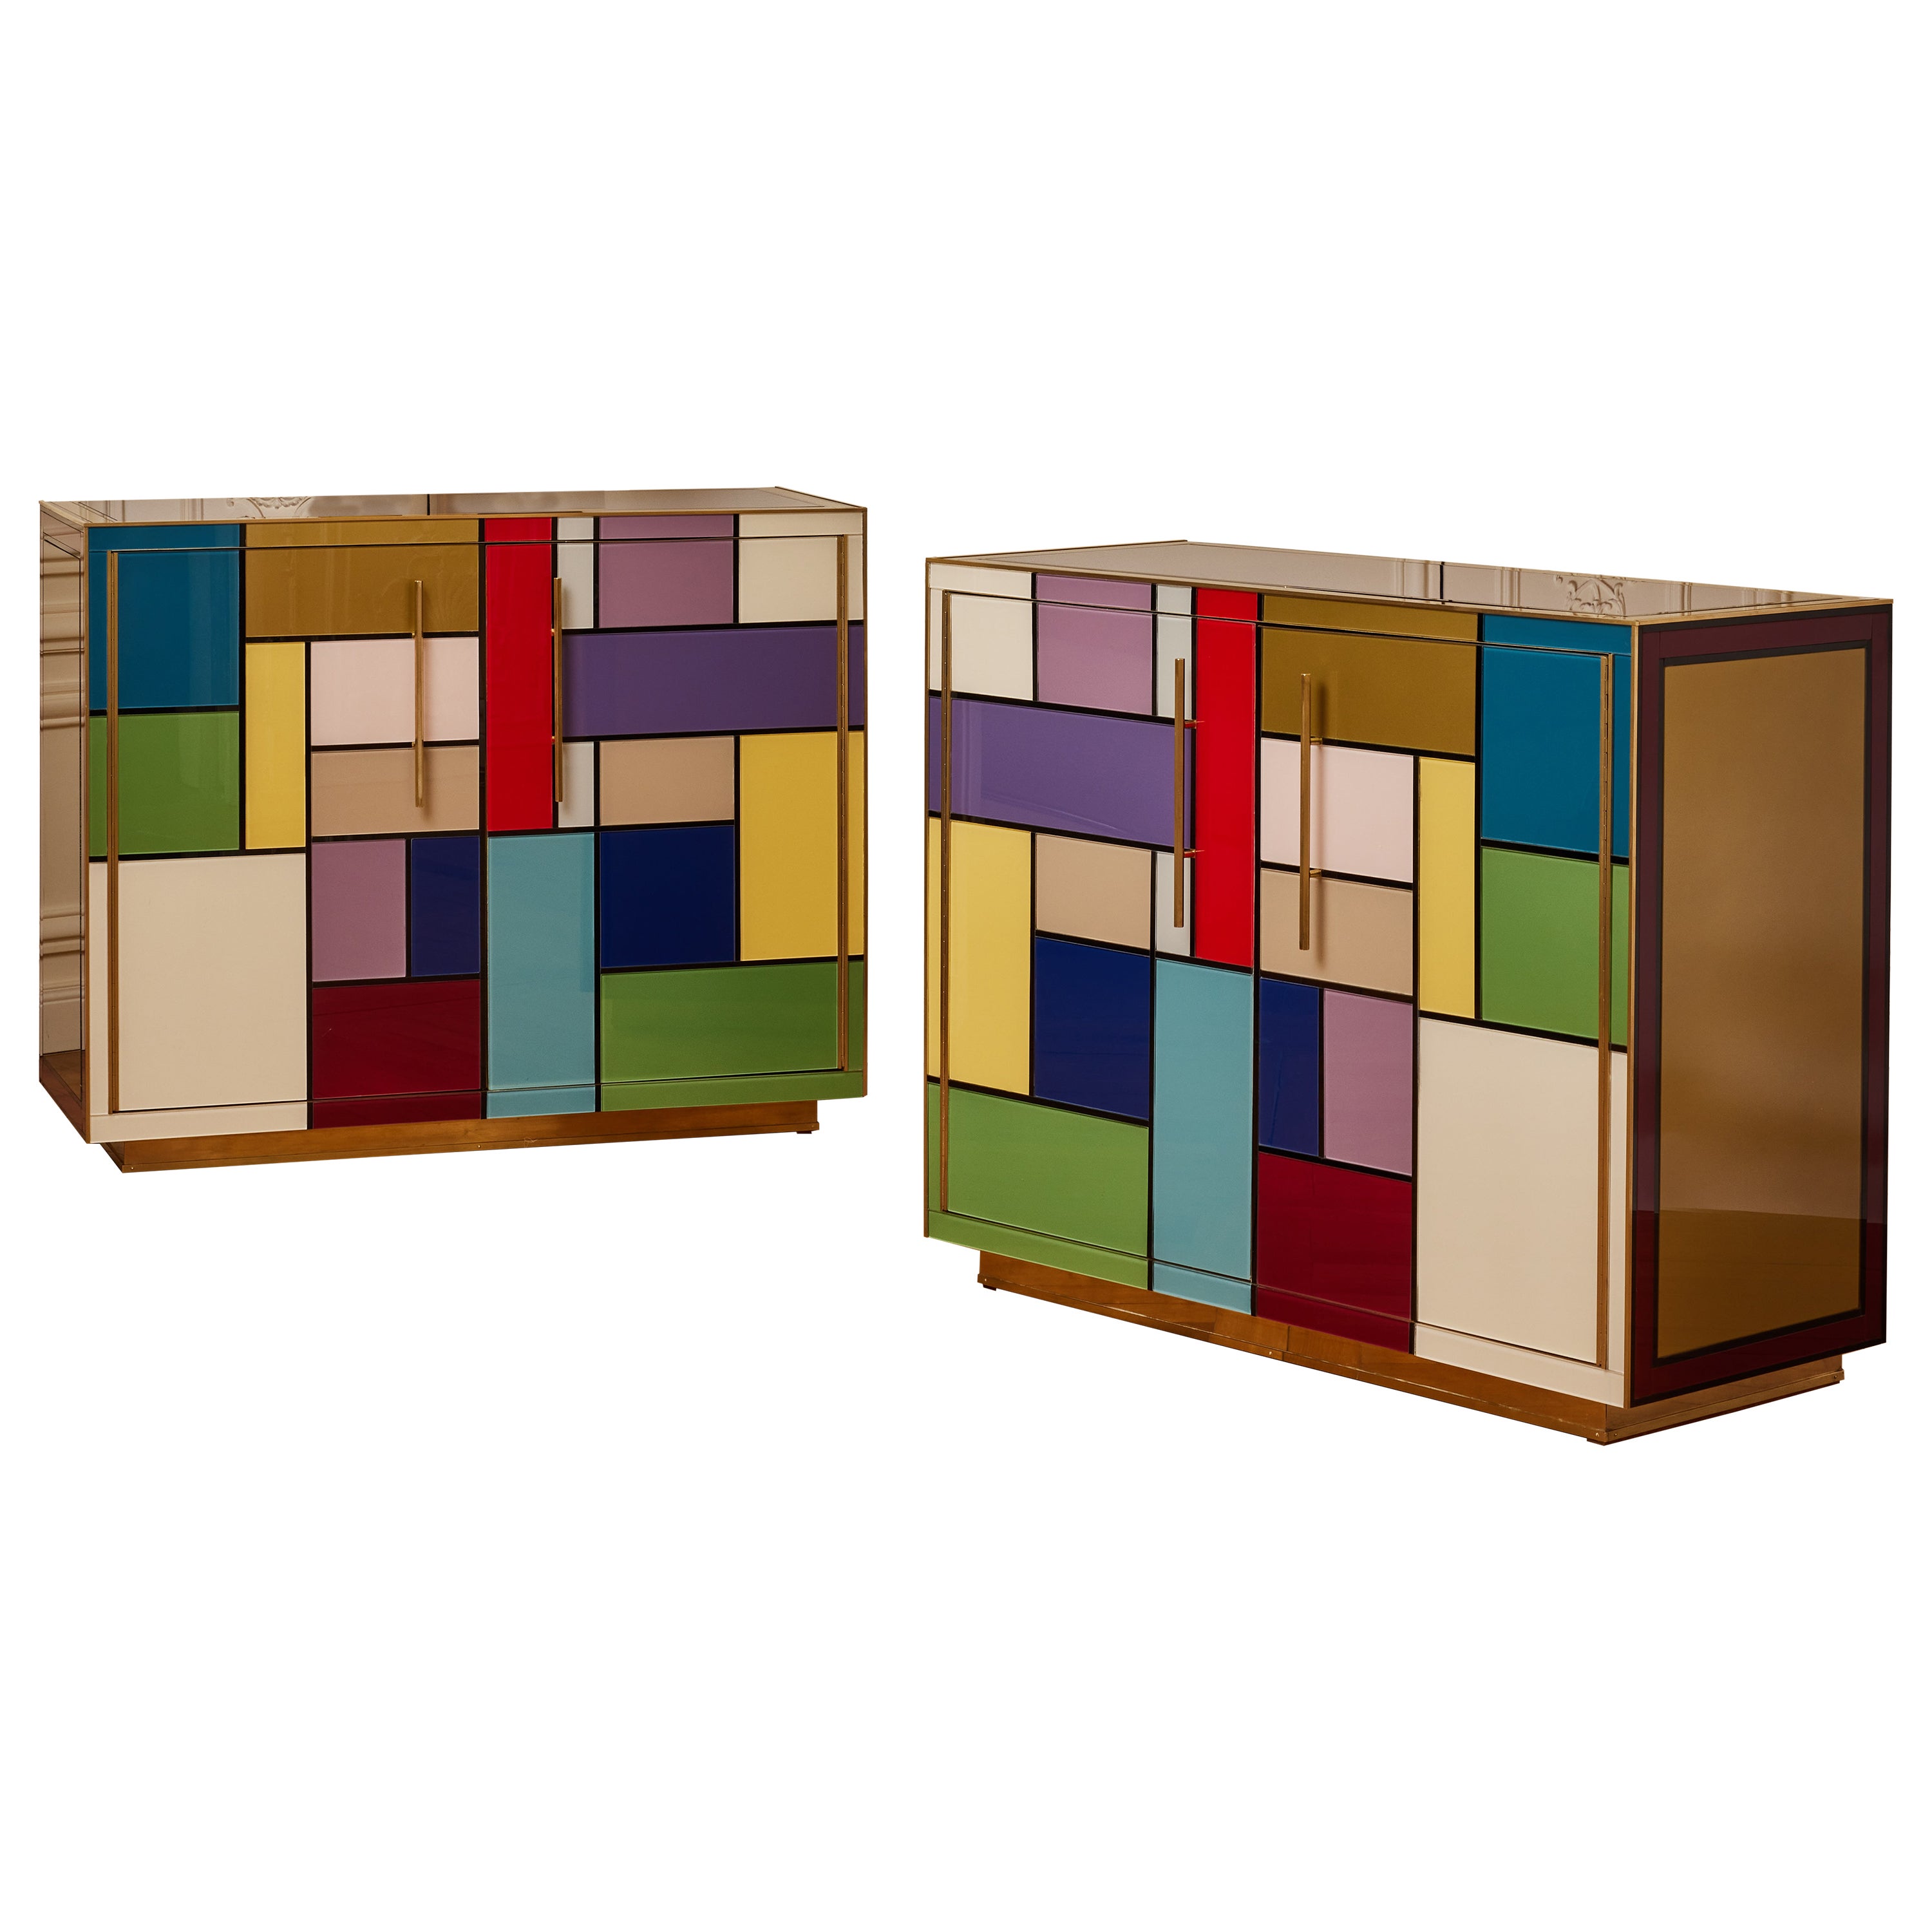 "Mondrian" Cabinet by Studio Glustin